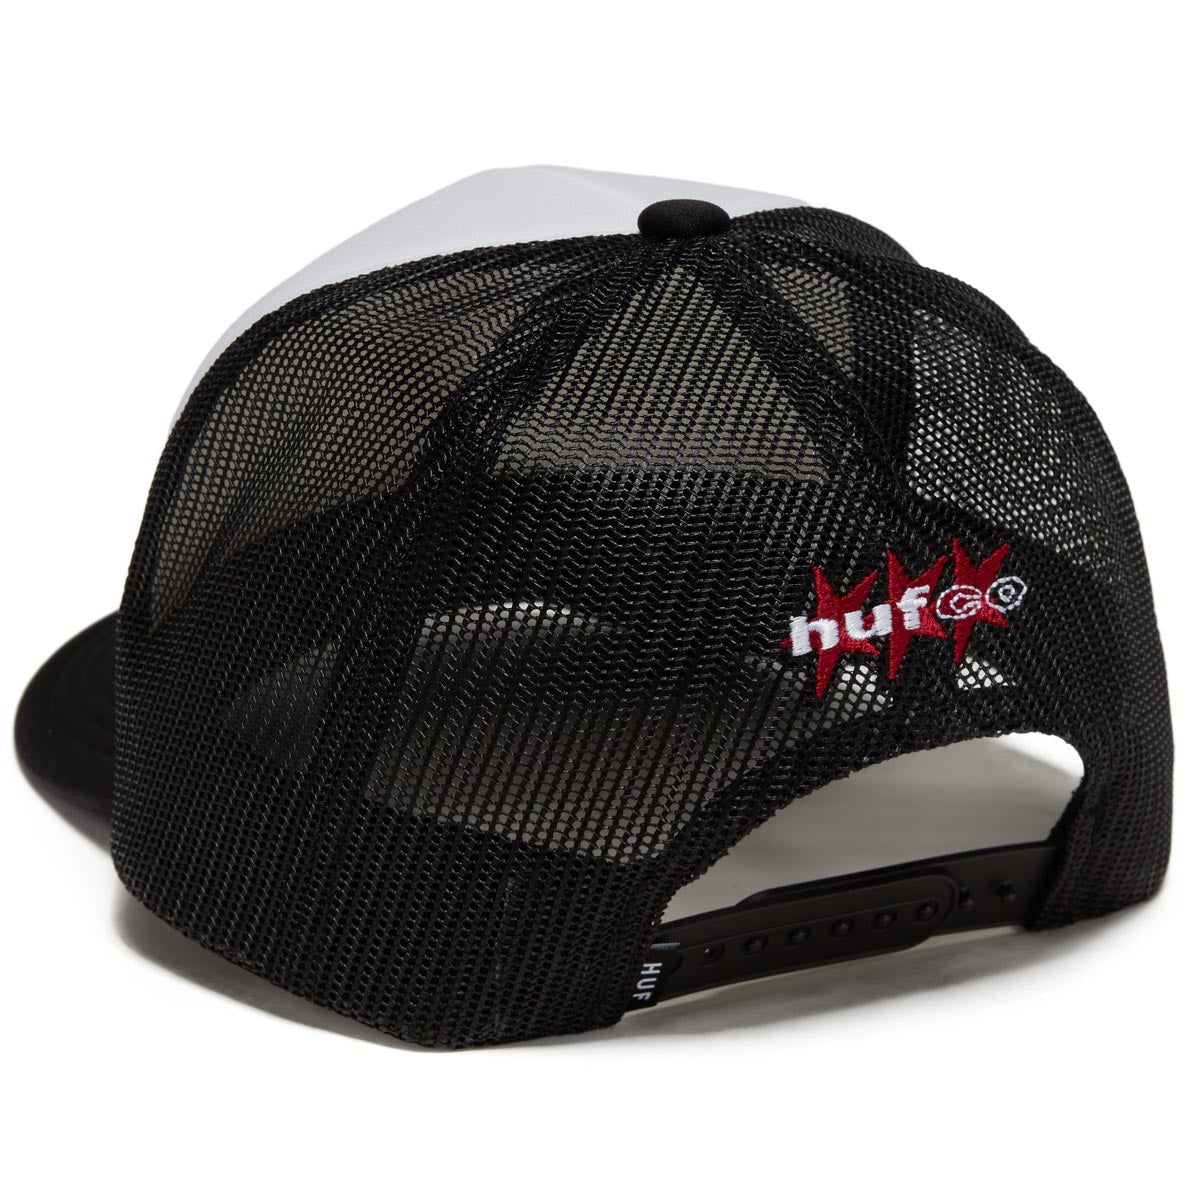 HUF Rizzo Trucker Hat - Black image 2